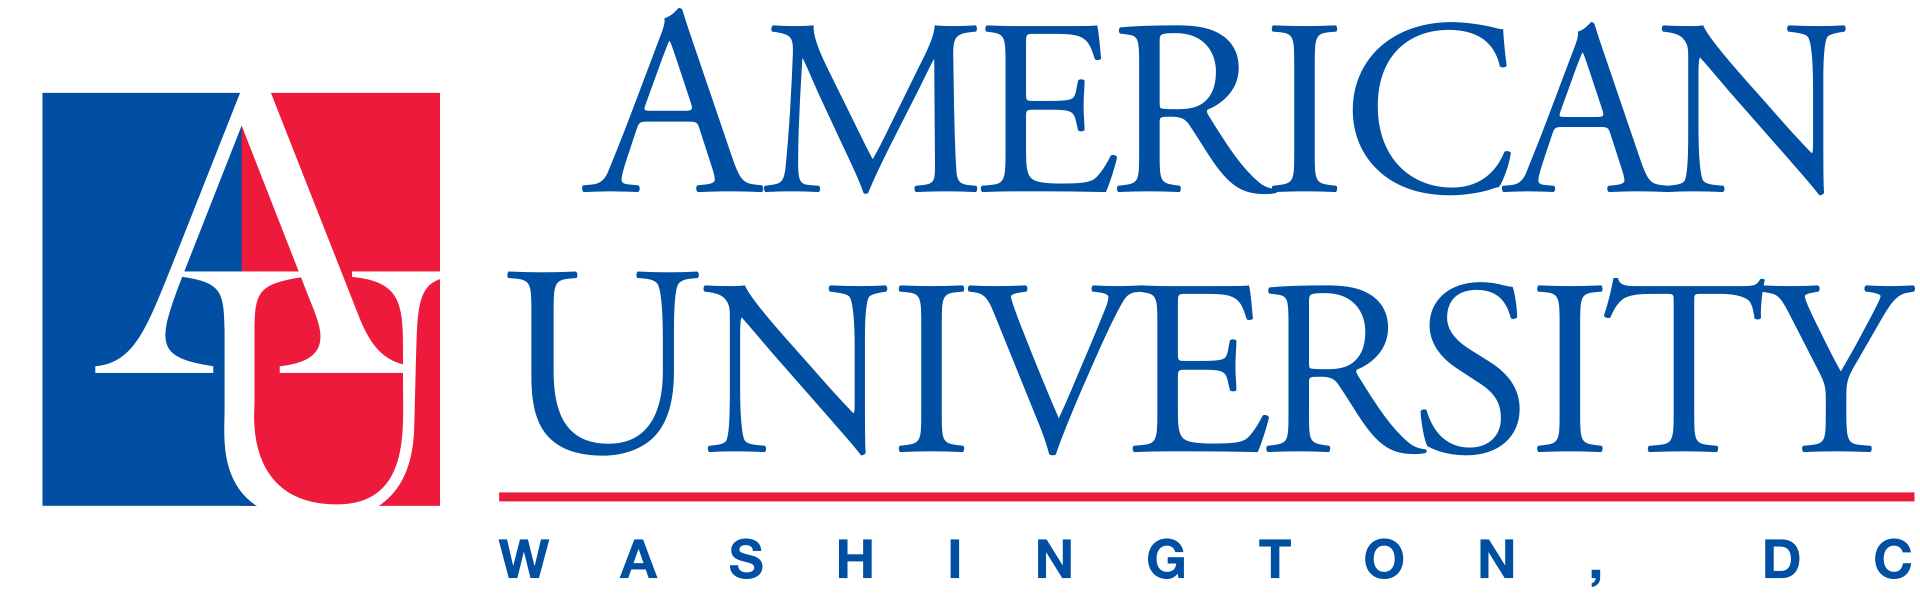 美国大学 logo, By 美国大学 - http://www.美国.edu，公共领域，http://commons.维基.org/w/index.php?curid = 54500563 "